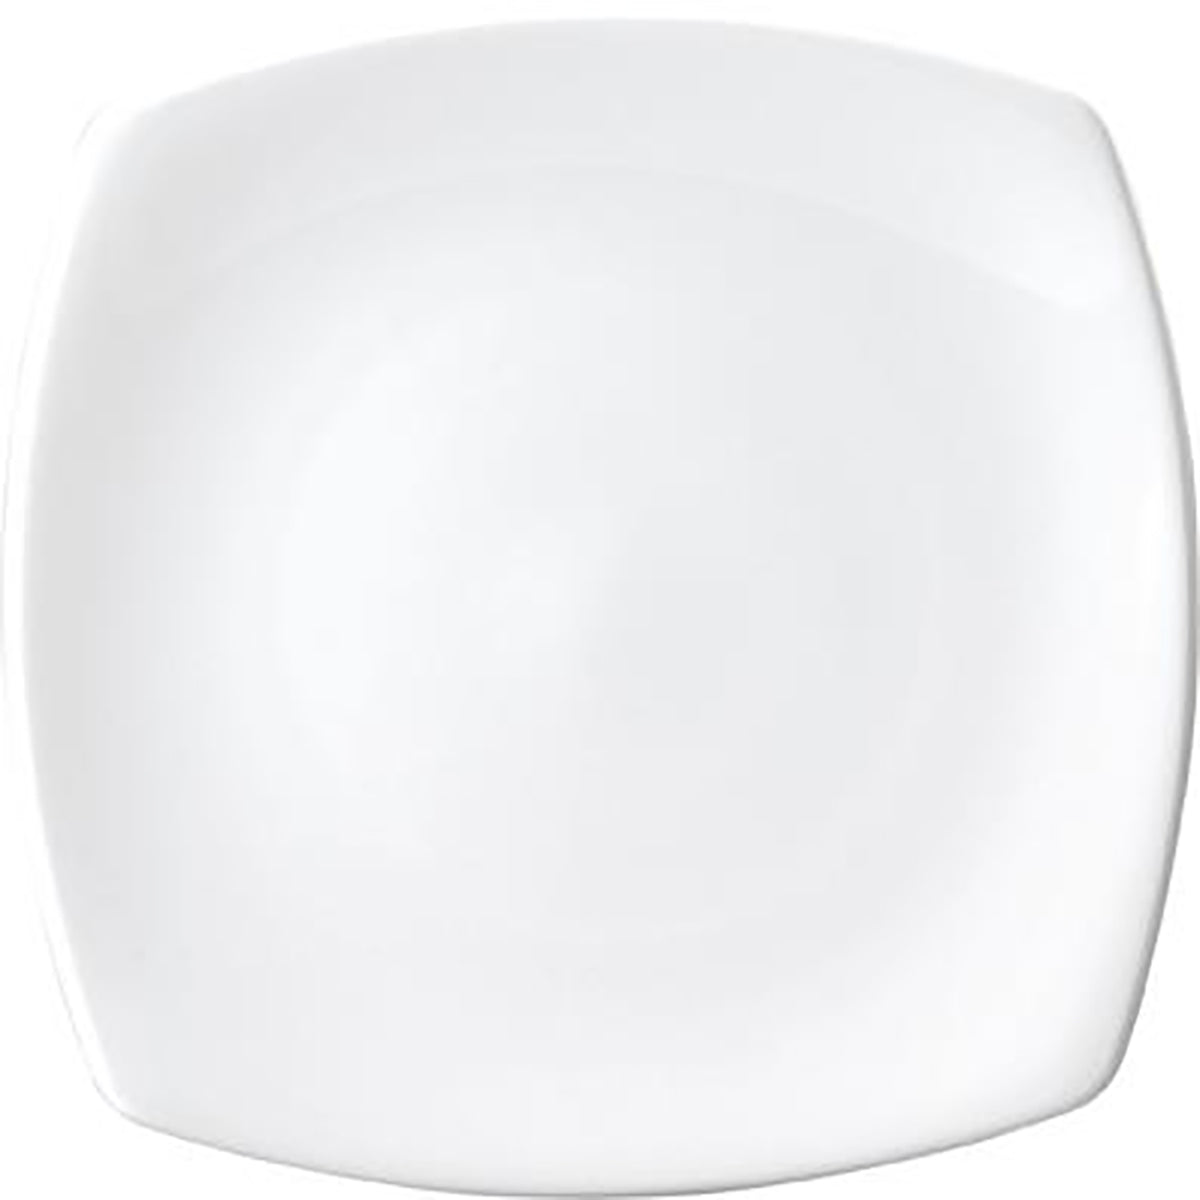 94405 Royal Porcelain Chelsea Square Plate Flat 270x270mm (4101) Tomkin Australia Hospitality Supplies